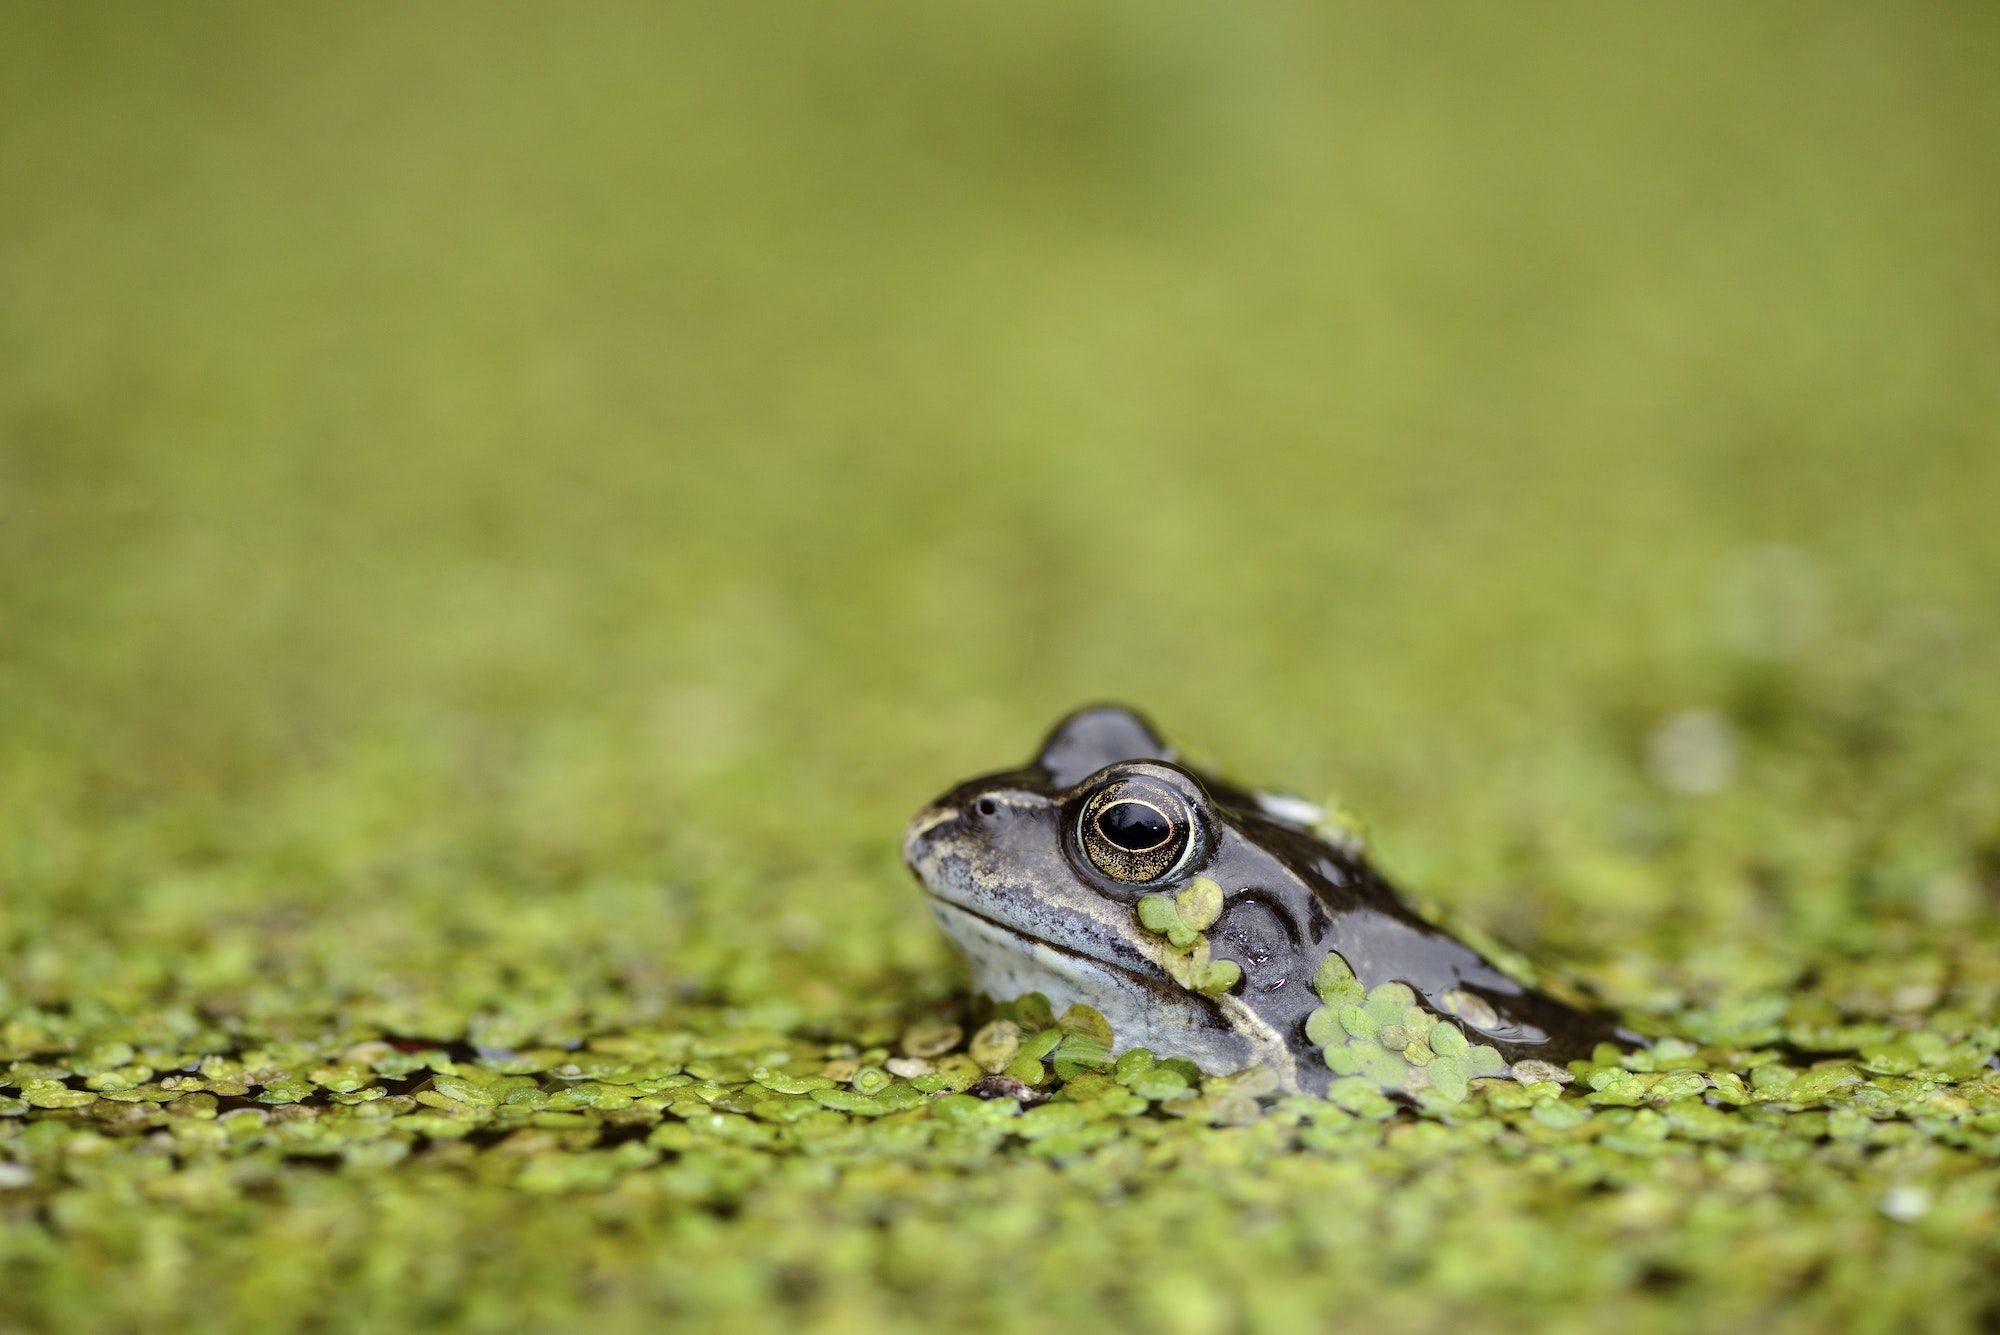 Common frog in duckweed in water